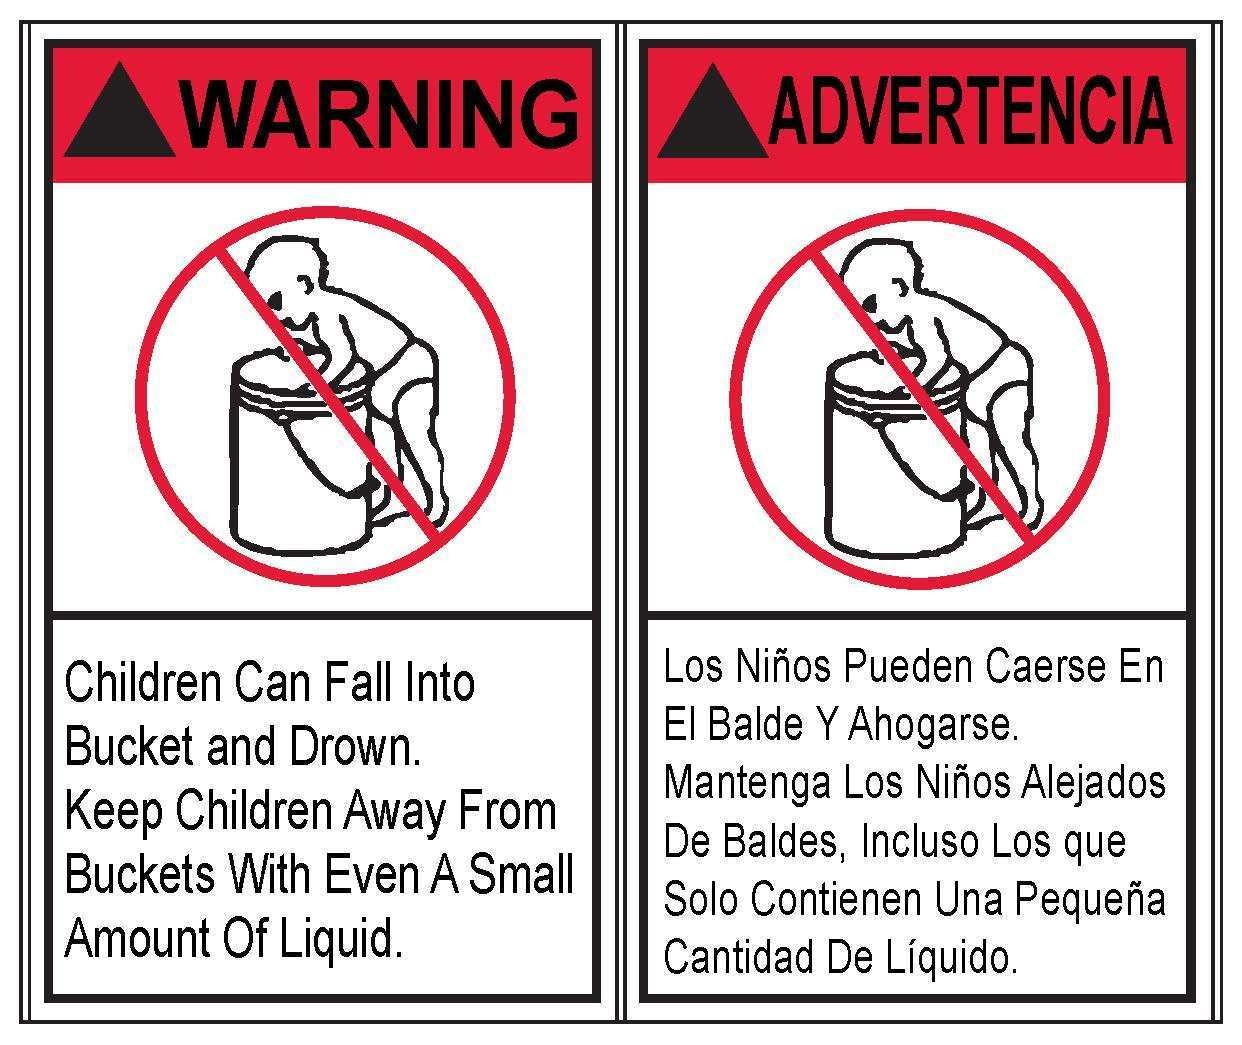 Warning Child Can Fall (English/Spanish) 2 in 1 set